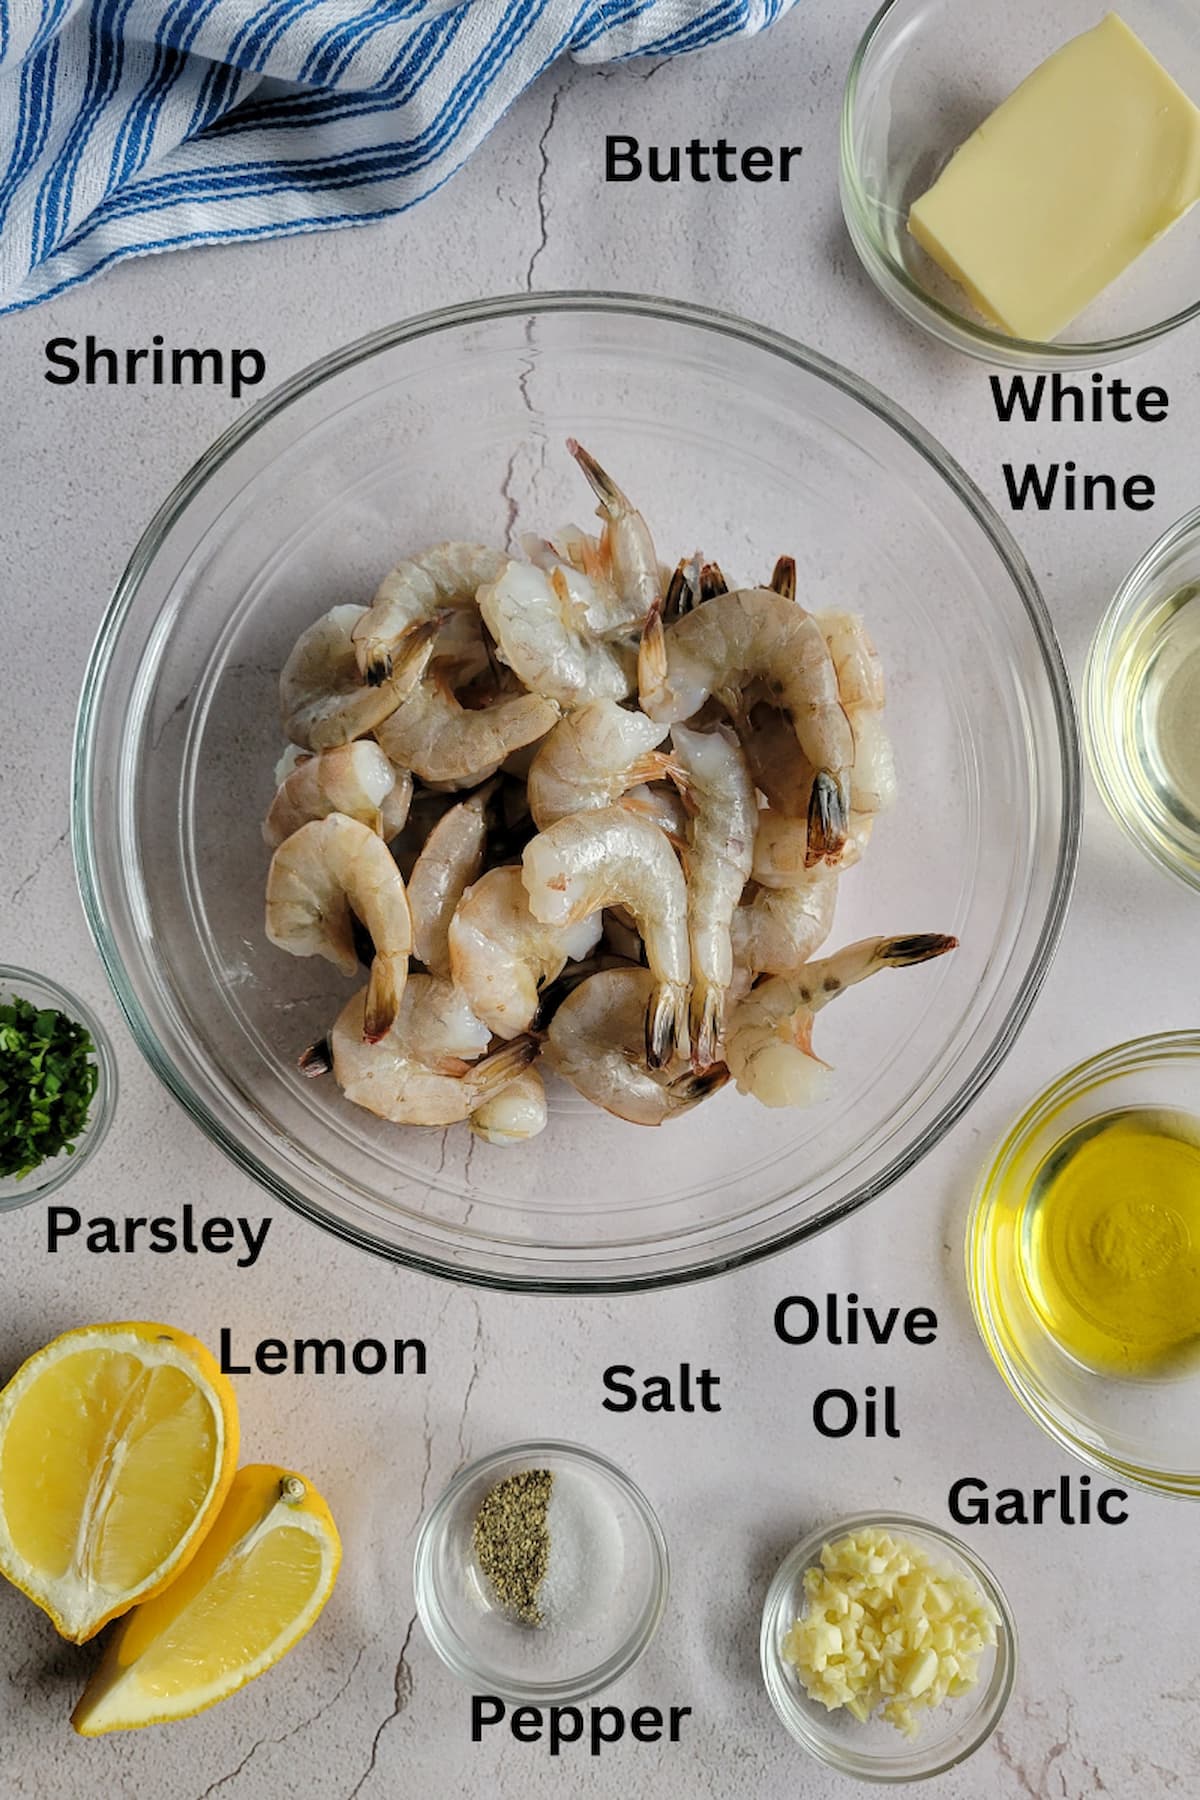 ingredients for sauteed shrimp - shrimp, butter, olive oil, white wine, salt/pepper, garlic, lemon, parsley